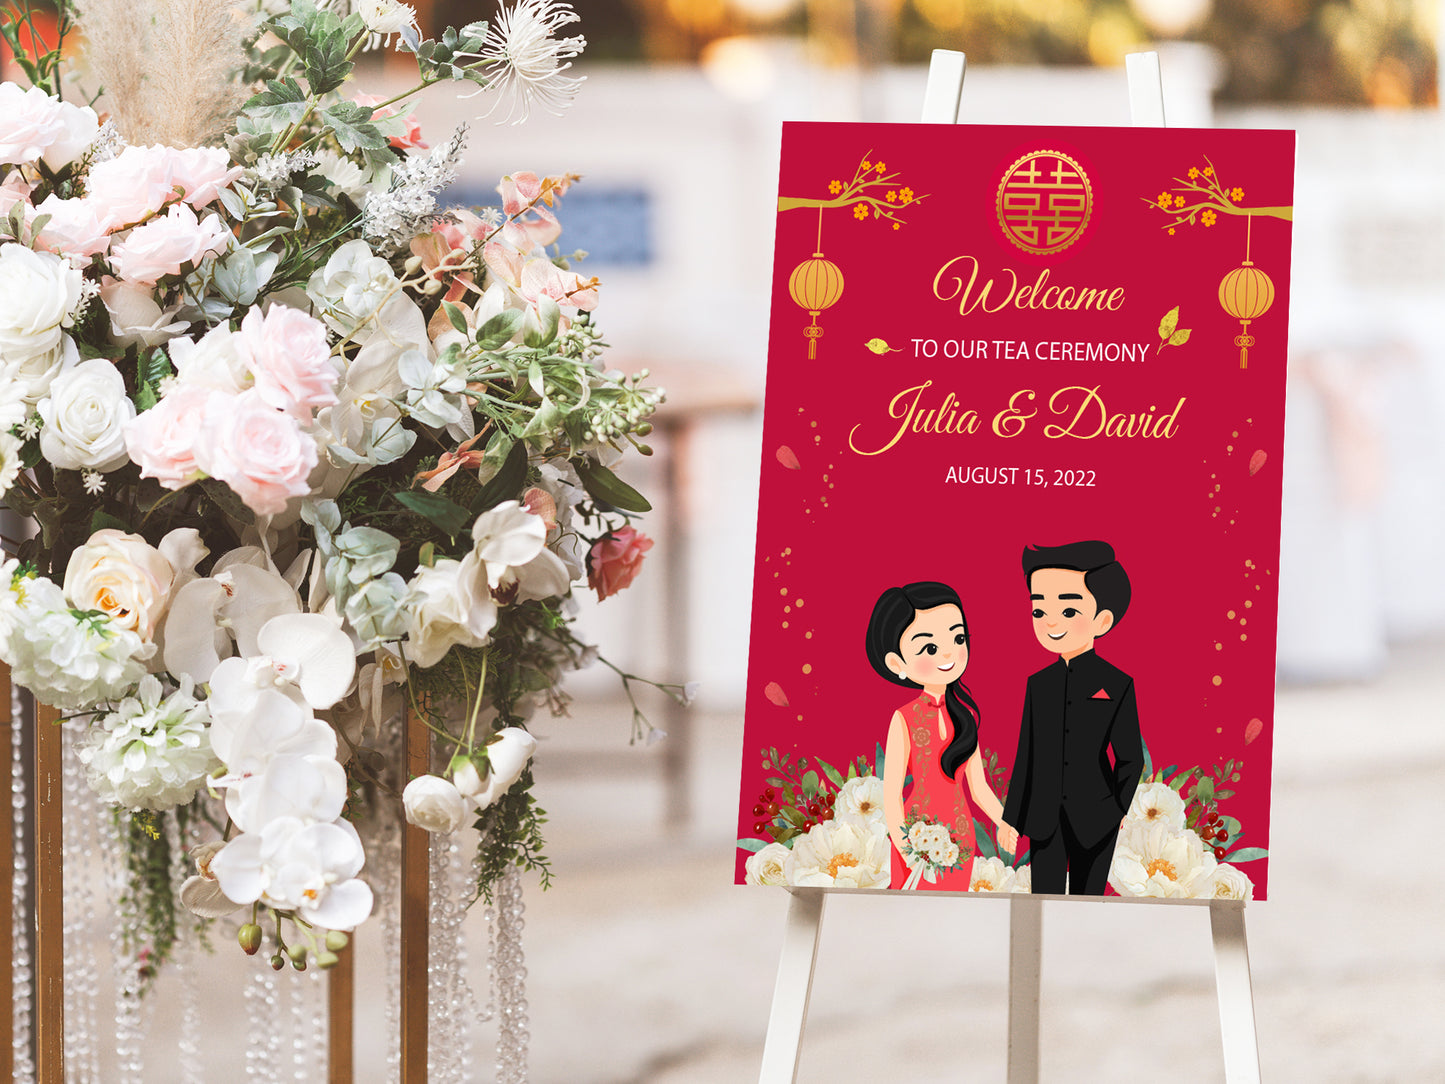 Cute Vietnamese Wedding, Tea ceremony, Welcome signage template #wcsl230501